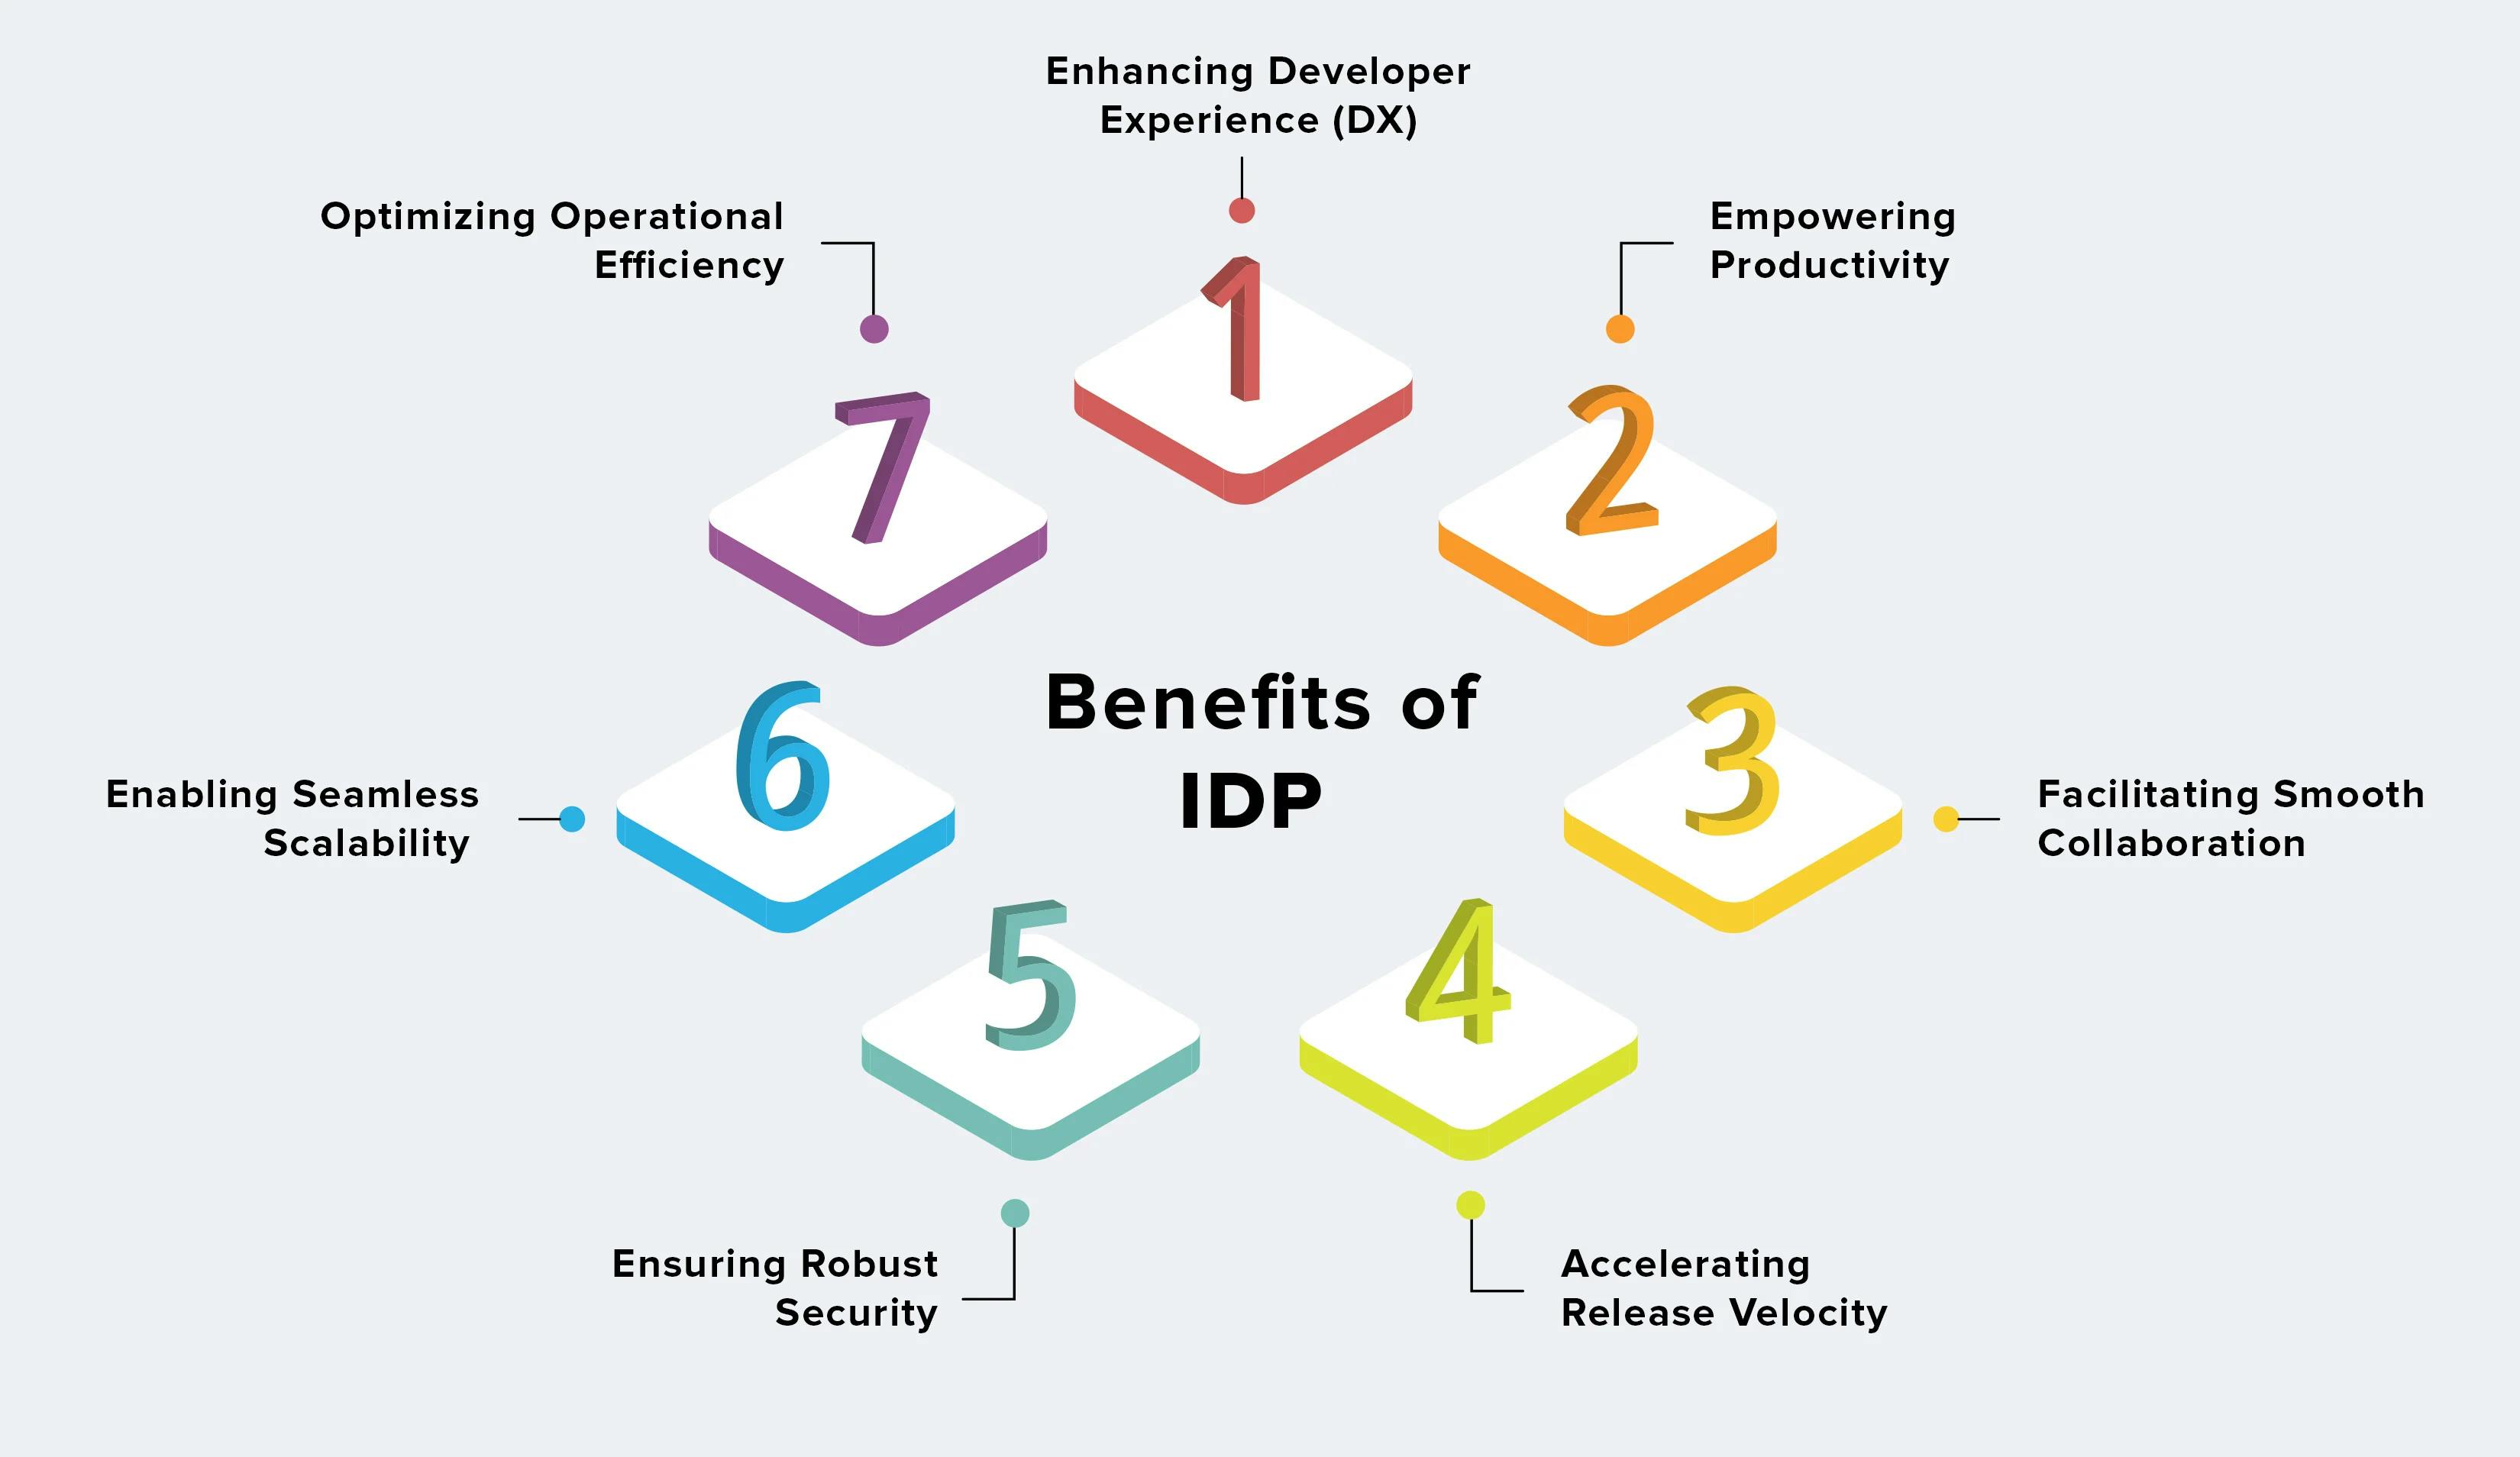 Benefits of IDP | Developer Experience is a key aspect of an Internal Developer Platform | Source: htpps://insights.daffodilsw.com/blog/platform-engineering